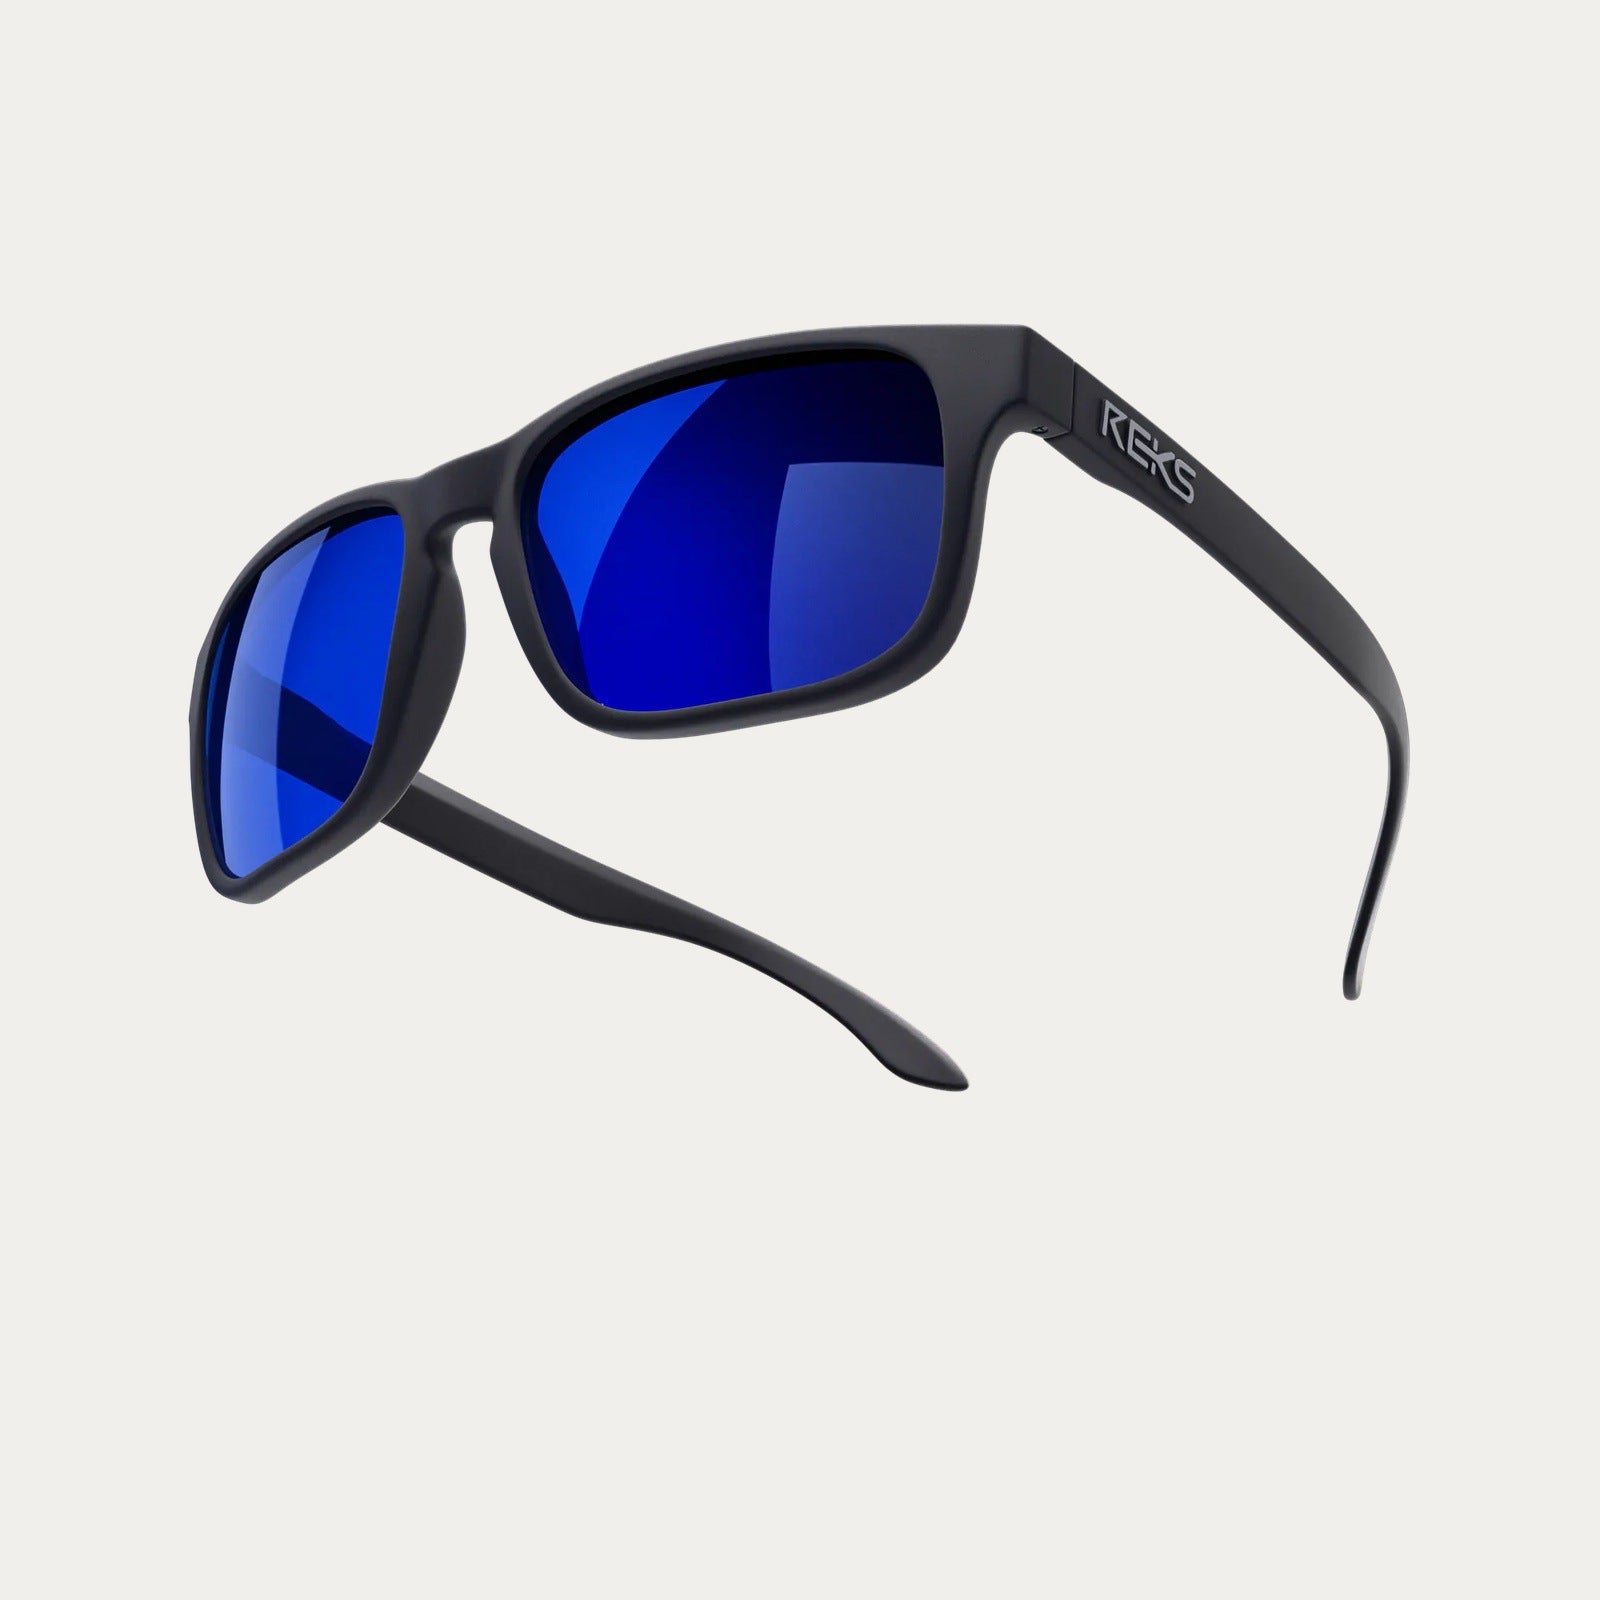 Reks | Sport Polycarbonate Sunglasses Blue Mirror